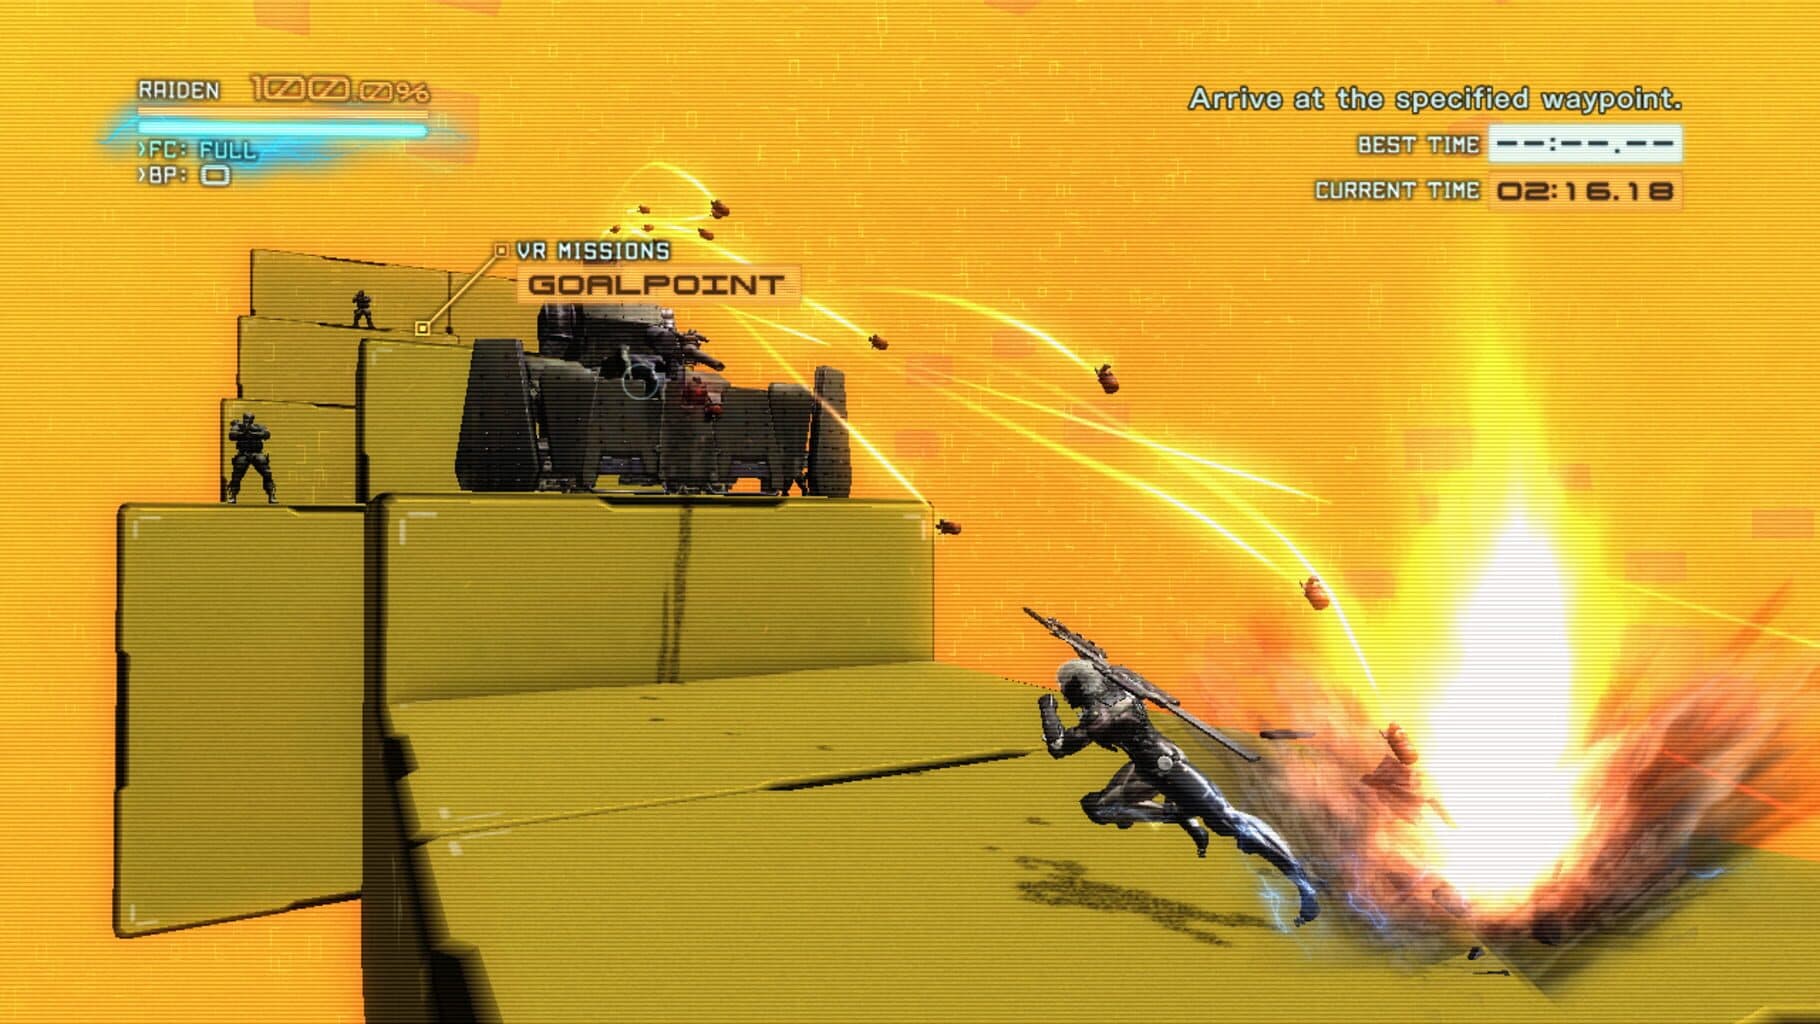 Metal Gear Rising: Revengeance VR Missions Image